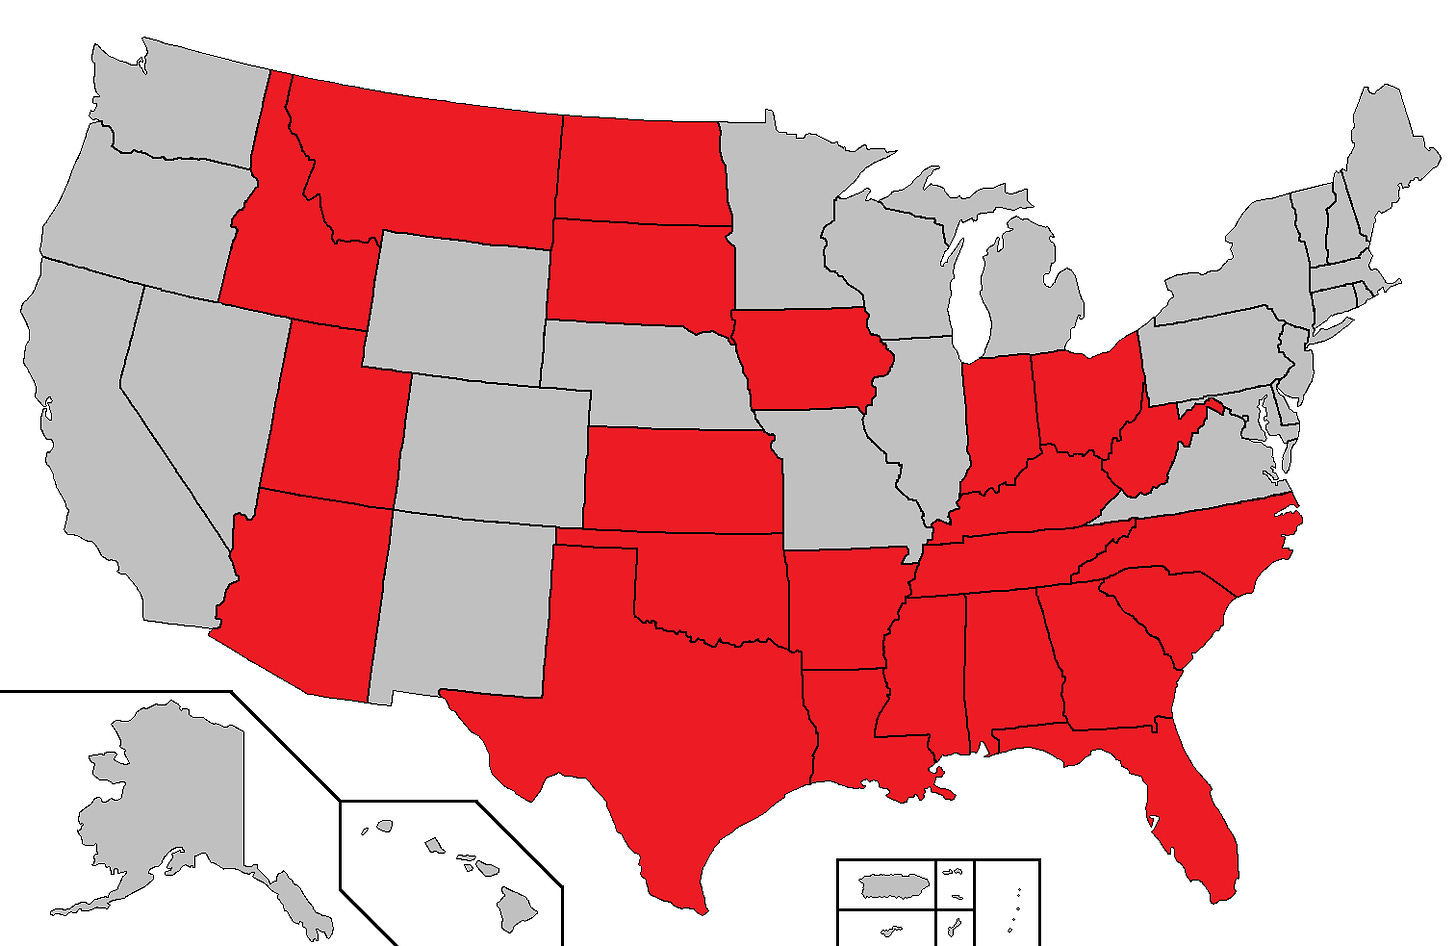 a map of the US with many states in red color: Arizona, Utah, Idaho, North Dakota, South Dakota, Kansas, Oklahoma, Texas, Iowa, Arkansas, Louisiana, Indiana, Ohio, Kentucky, West Virginia, Tennessee, North Carolina, South Carolina, Georgia, Mississippi, Alabama, Florida